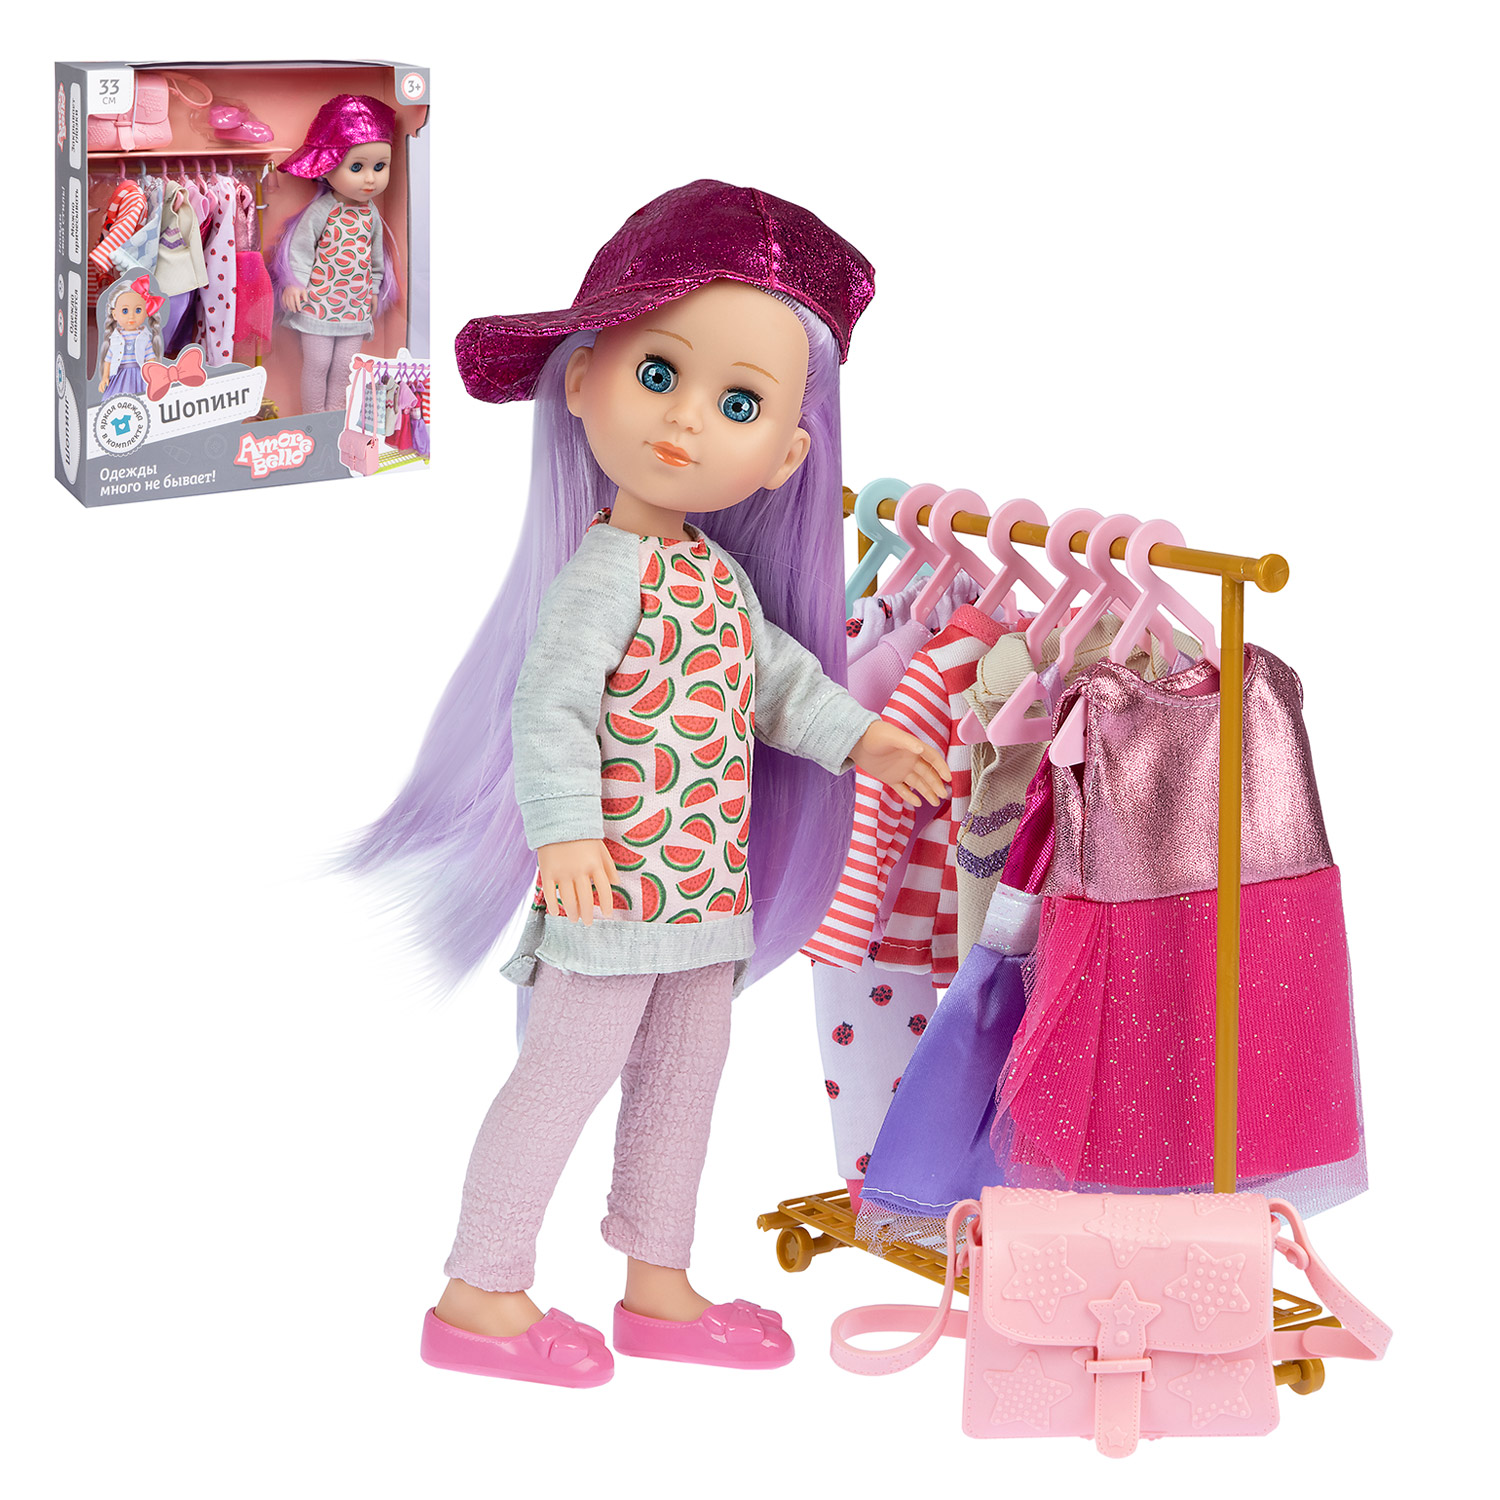 Кукла JB0211475 серия Шопинг с аксессуарами в коробке ТМ Amore Bello - Йошкар-Ола 